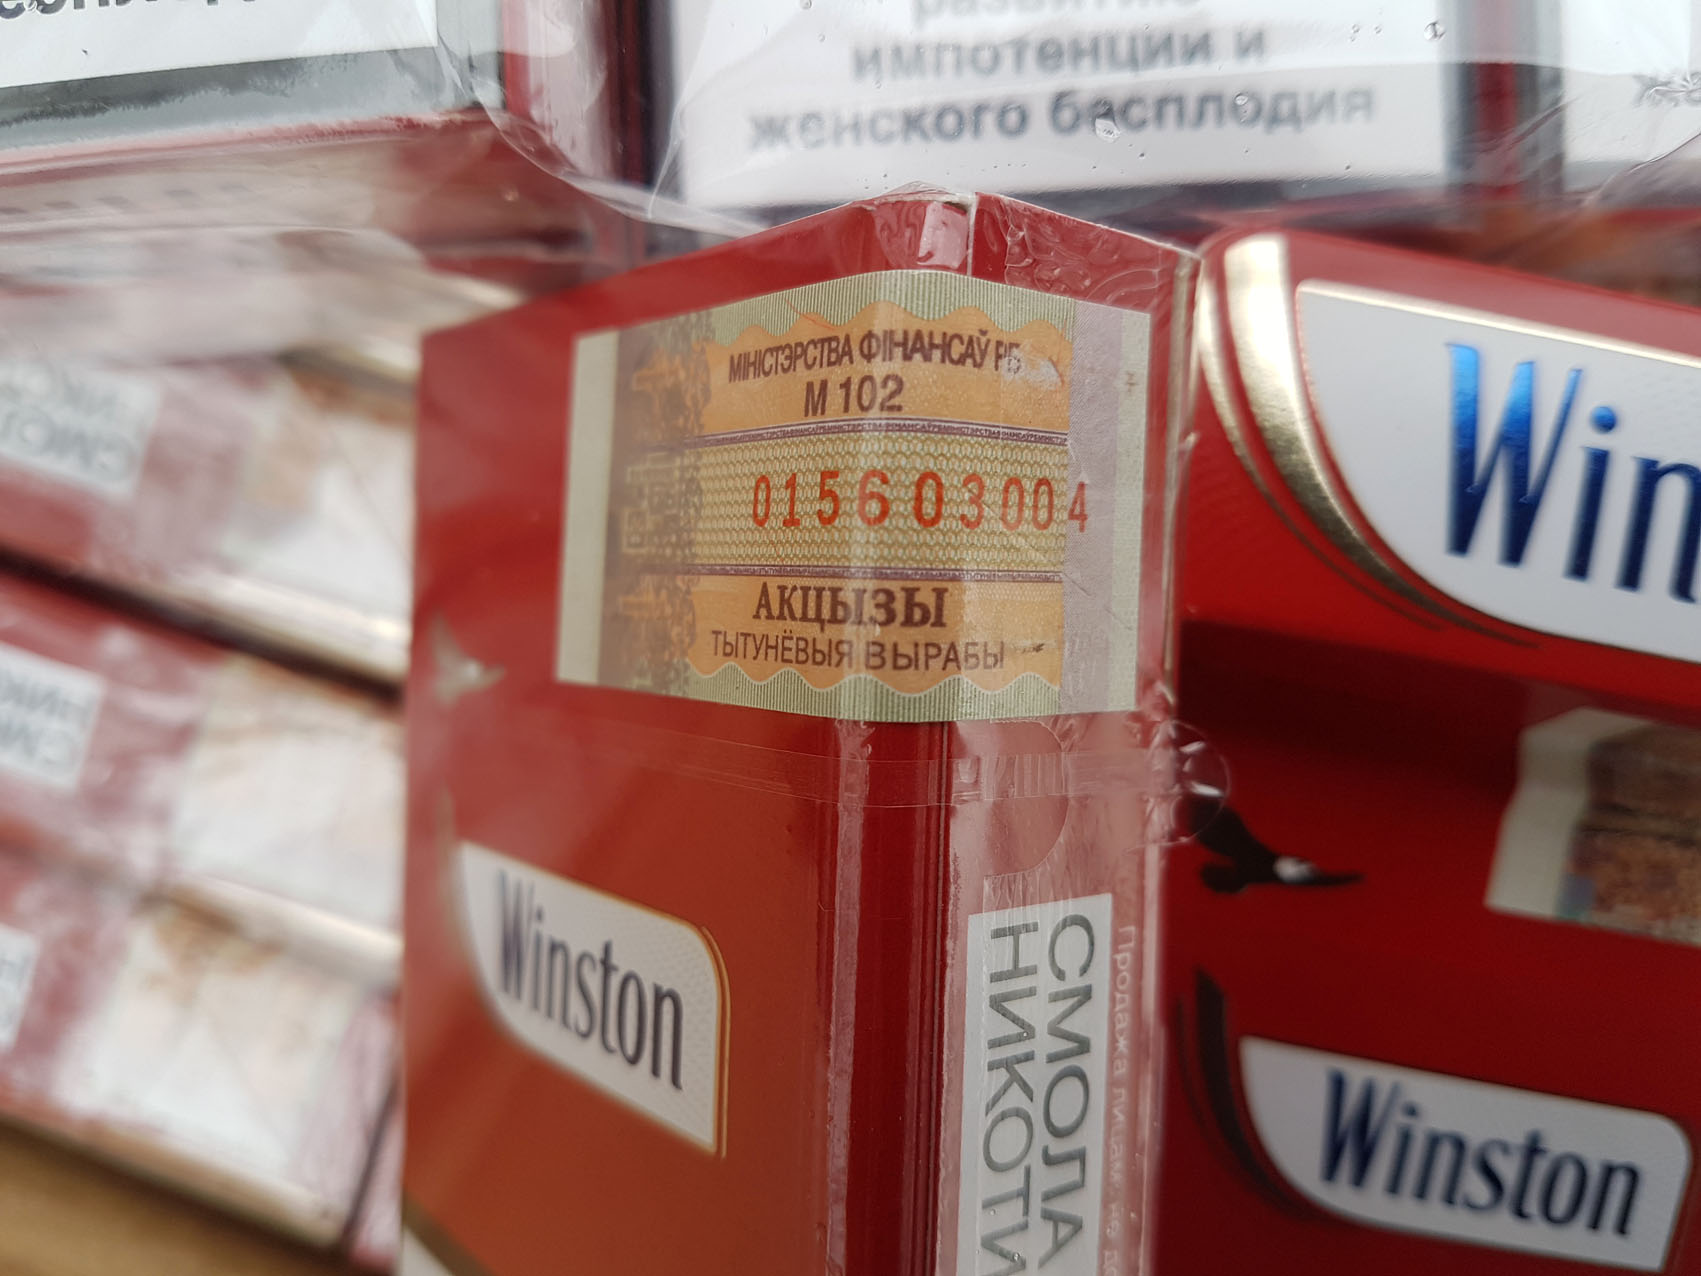 2019-03-16-ties-paneveziu-2-mln-euru-vertes-cigaretes.jpg